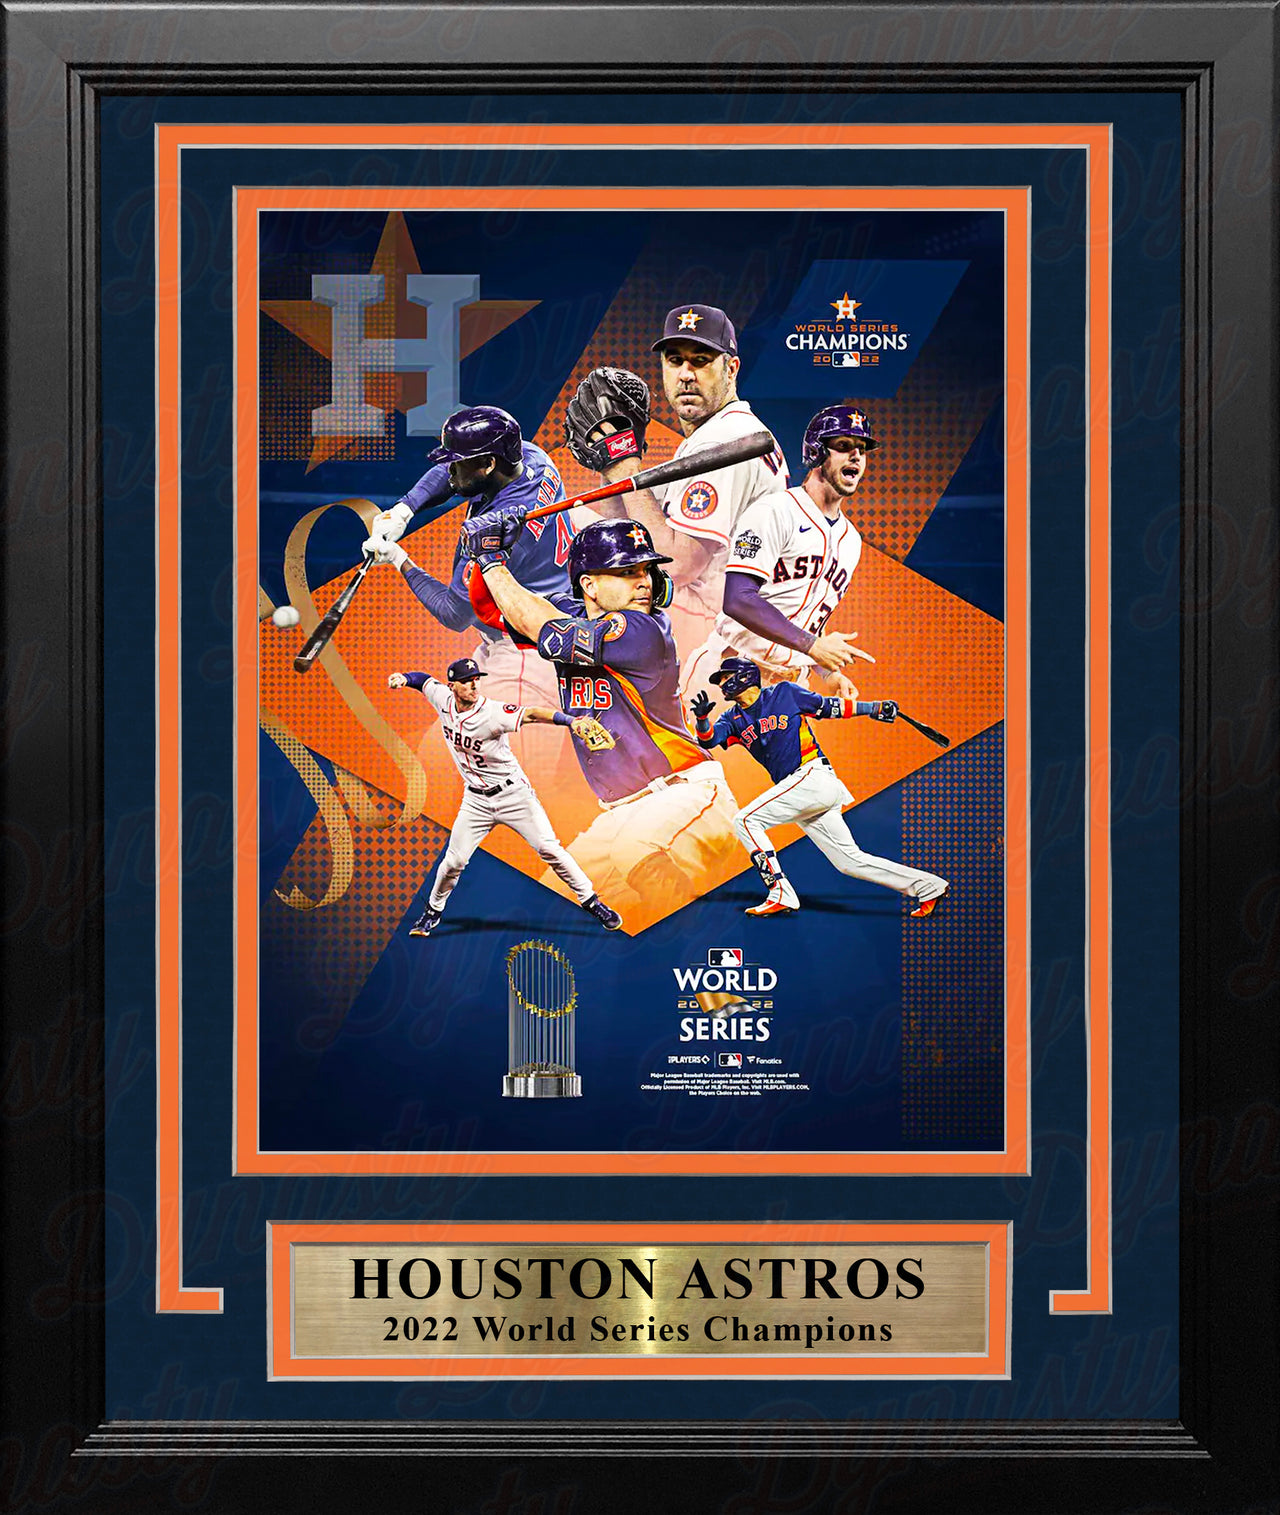 Houston Astros 2022 World Series Champions 8" x 10" Framed Baseball Photo - Dynasty Sports & Framing 